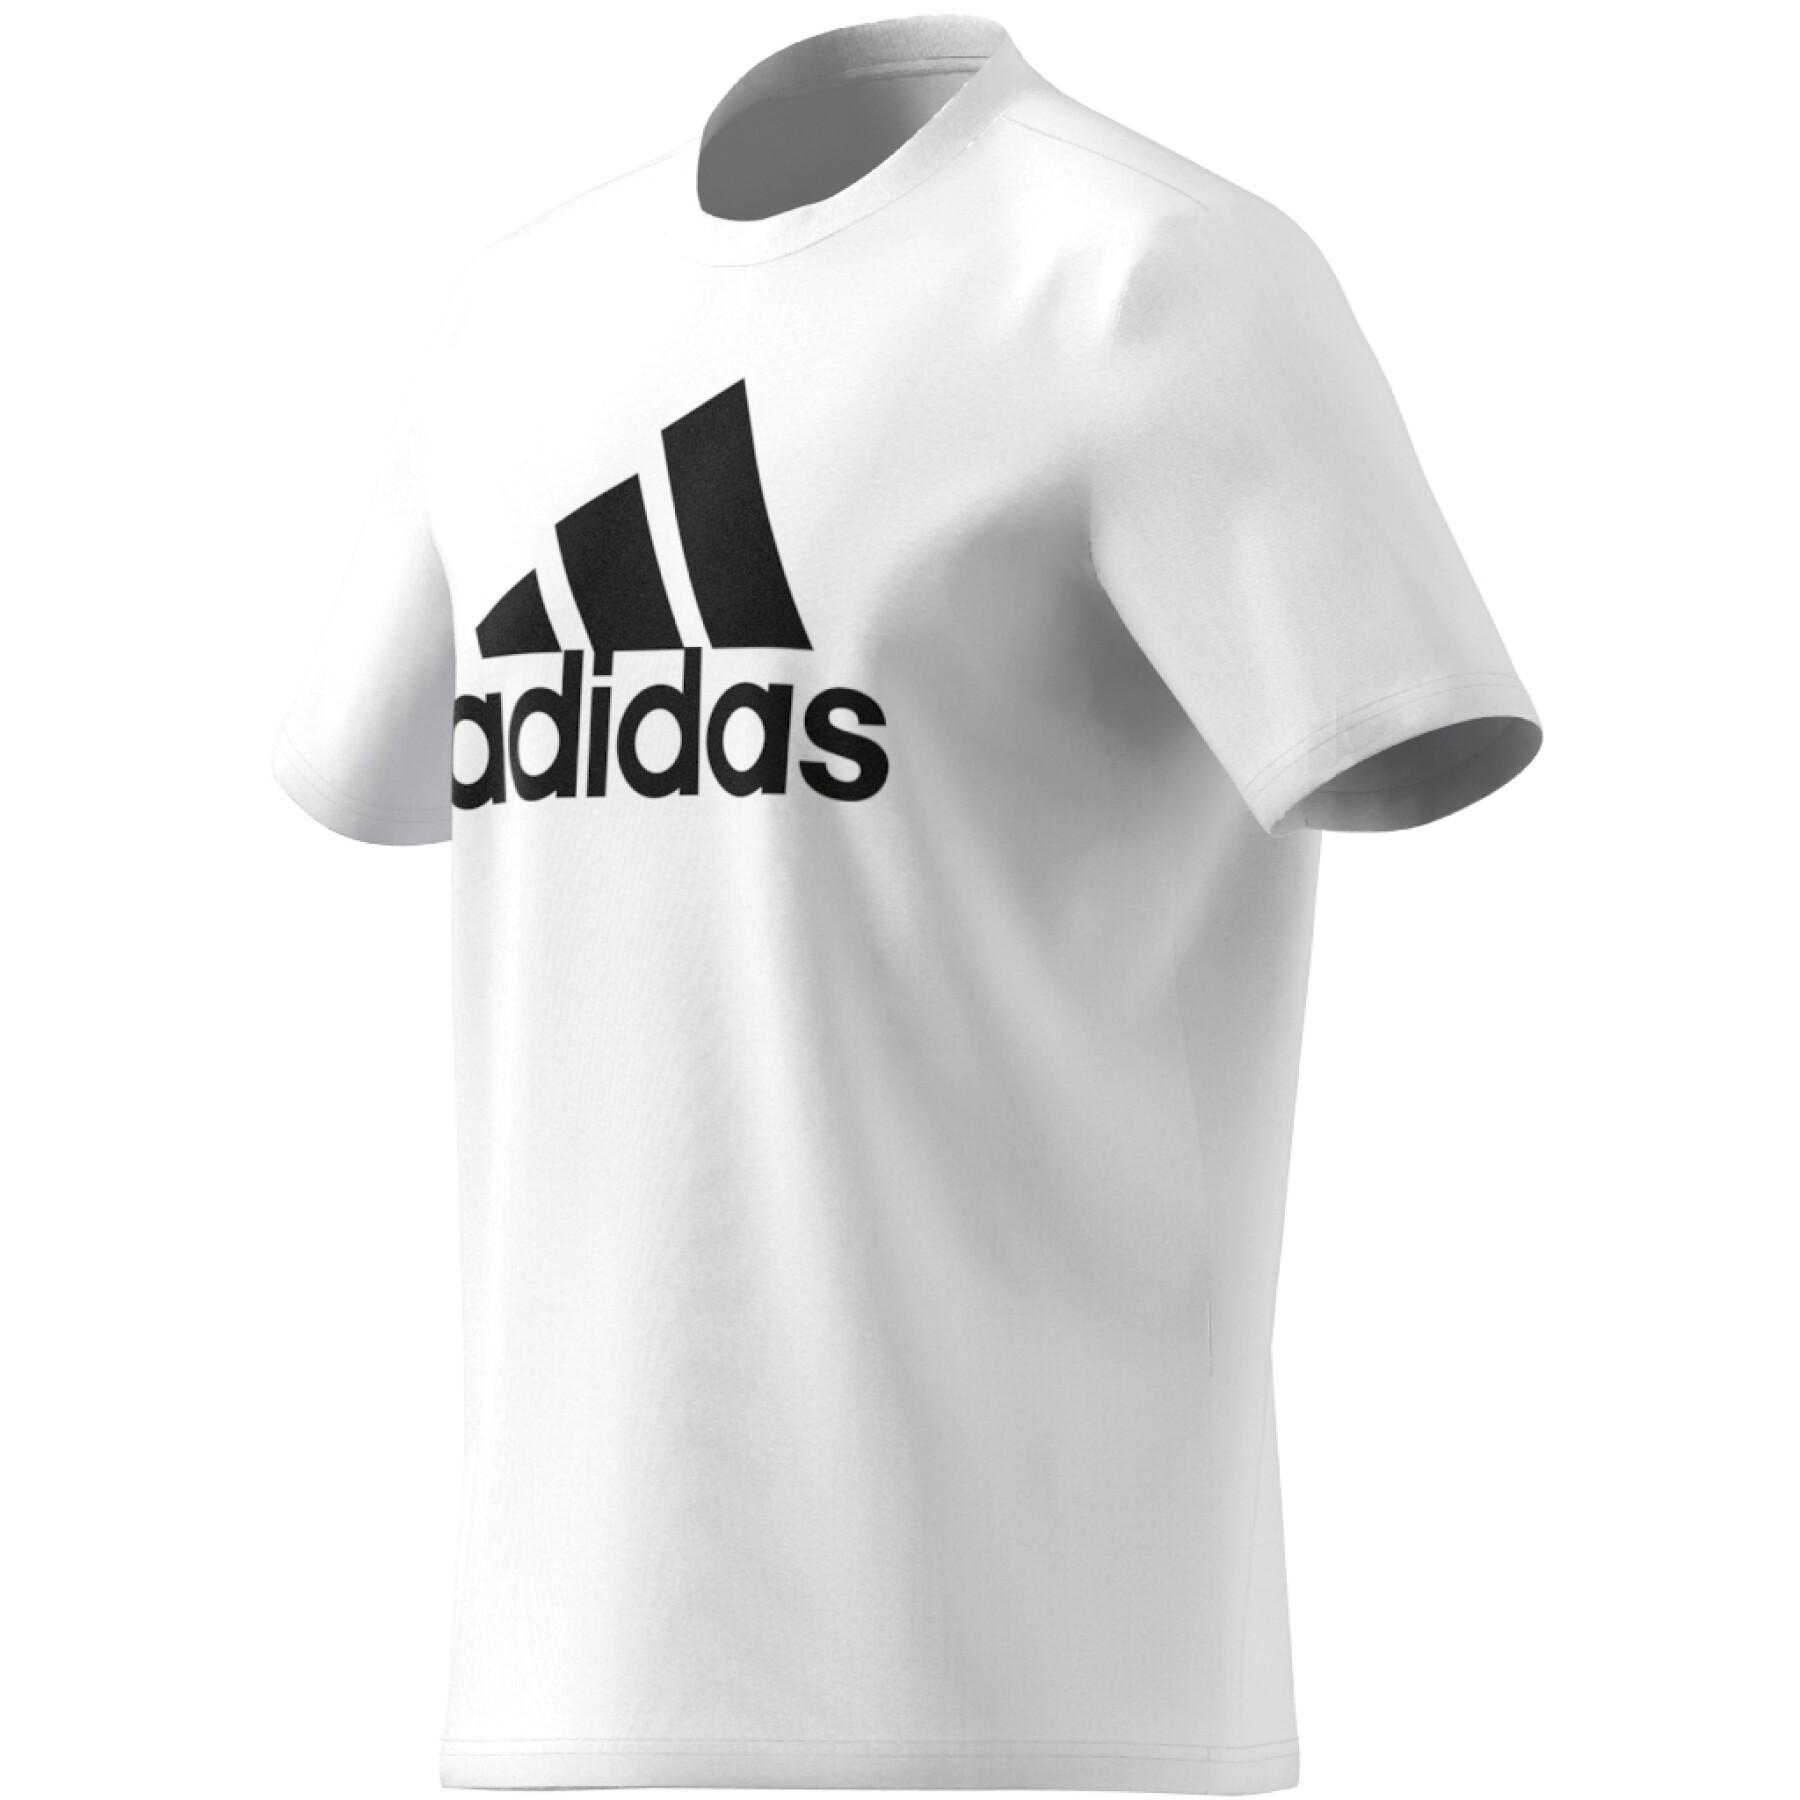 lafc jersey adidas store - adidas sportswear Essentials Single Jersey 3 -  Stripes Tee Better Scarlet / White IC9339